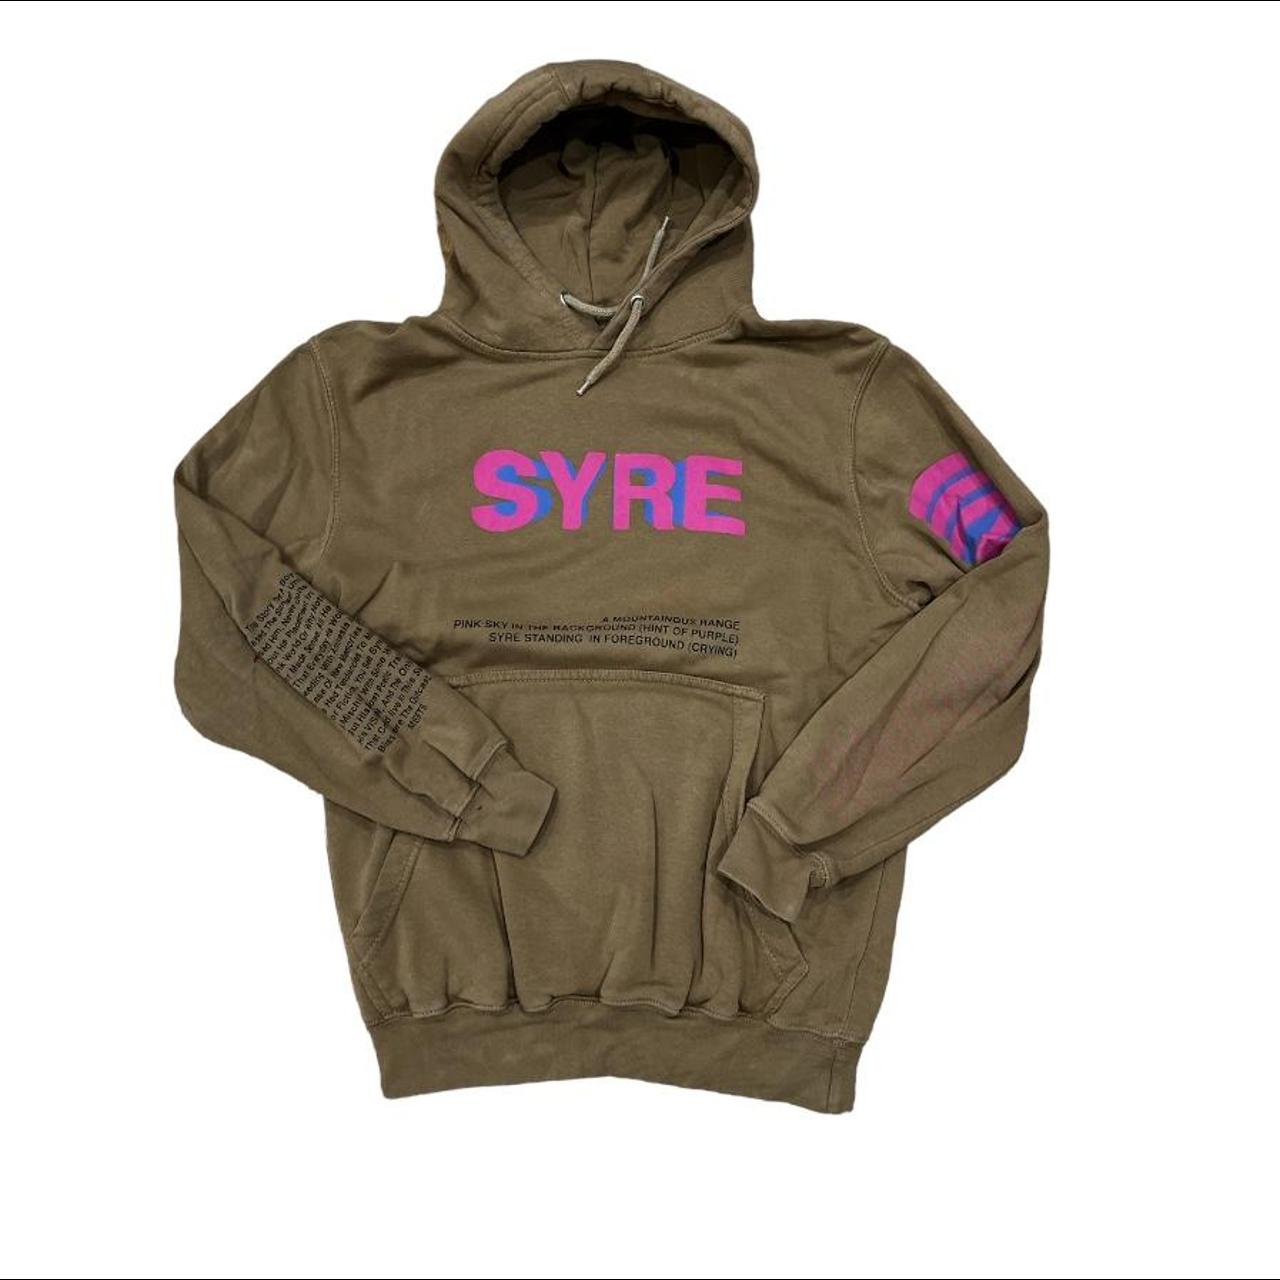 MSTFs jaden smith SYRE sweatshirt, size: s, worn